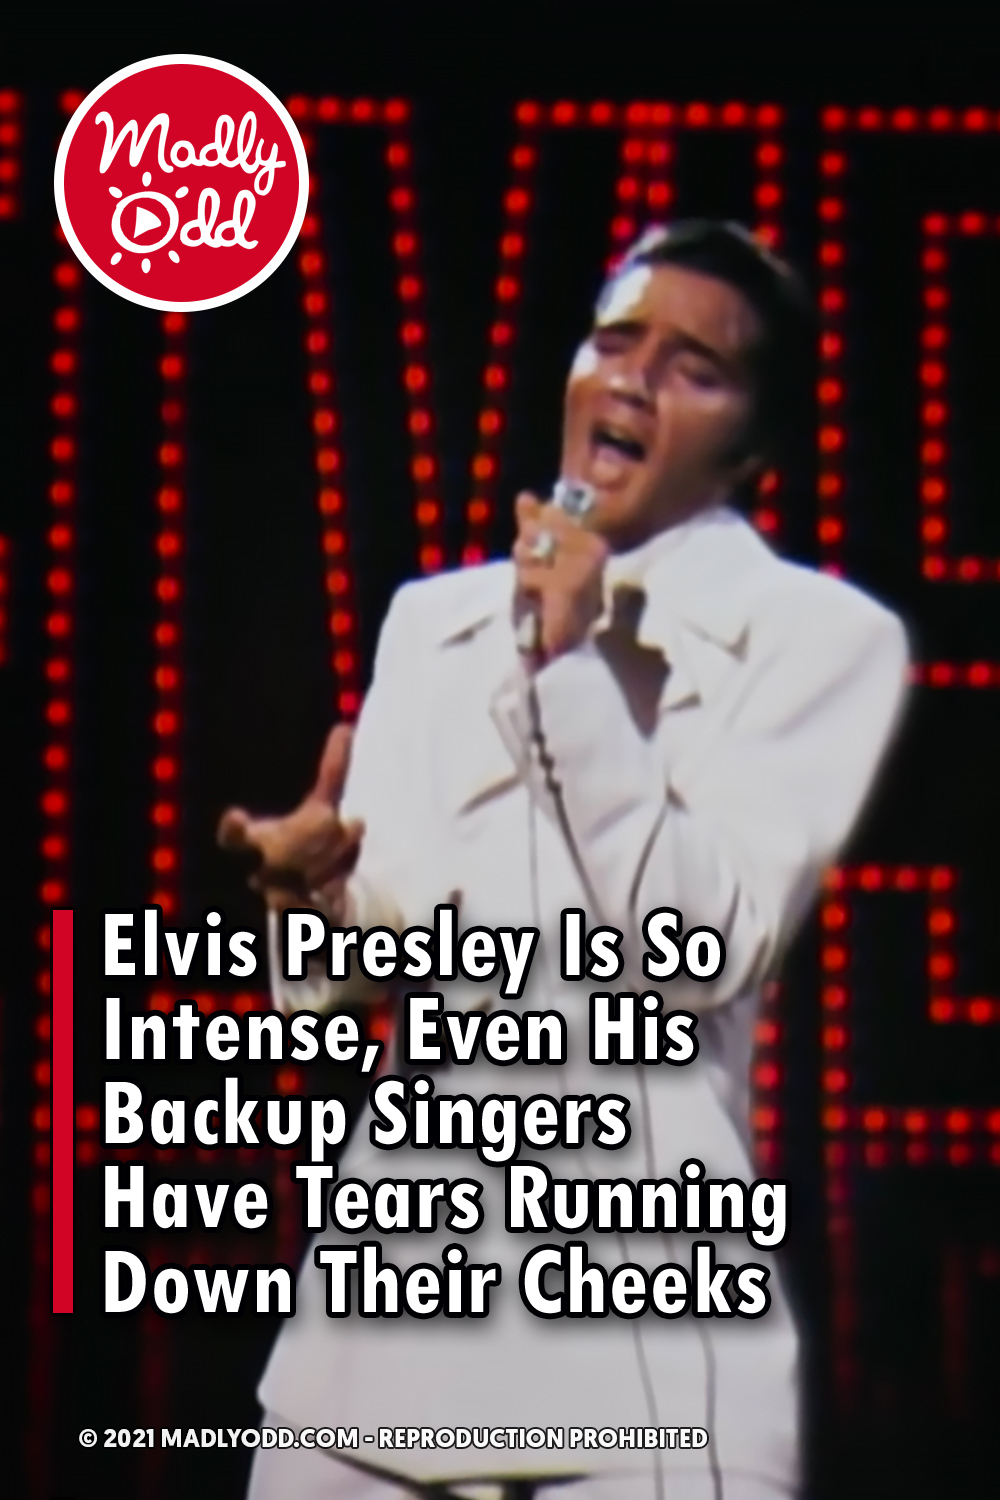 Elvis Presley Is So Intense, Even His Backup Singers Have Tears Running Down Their Cheeks